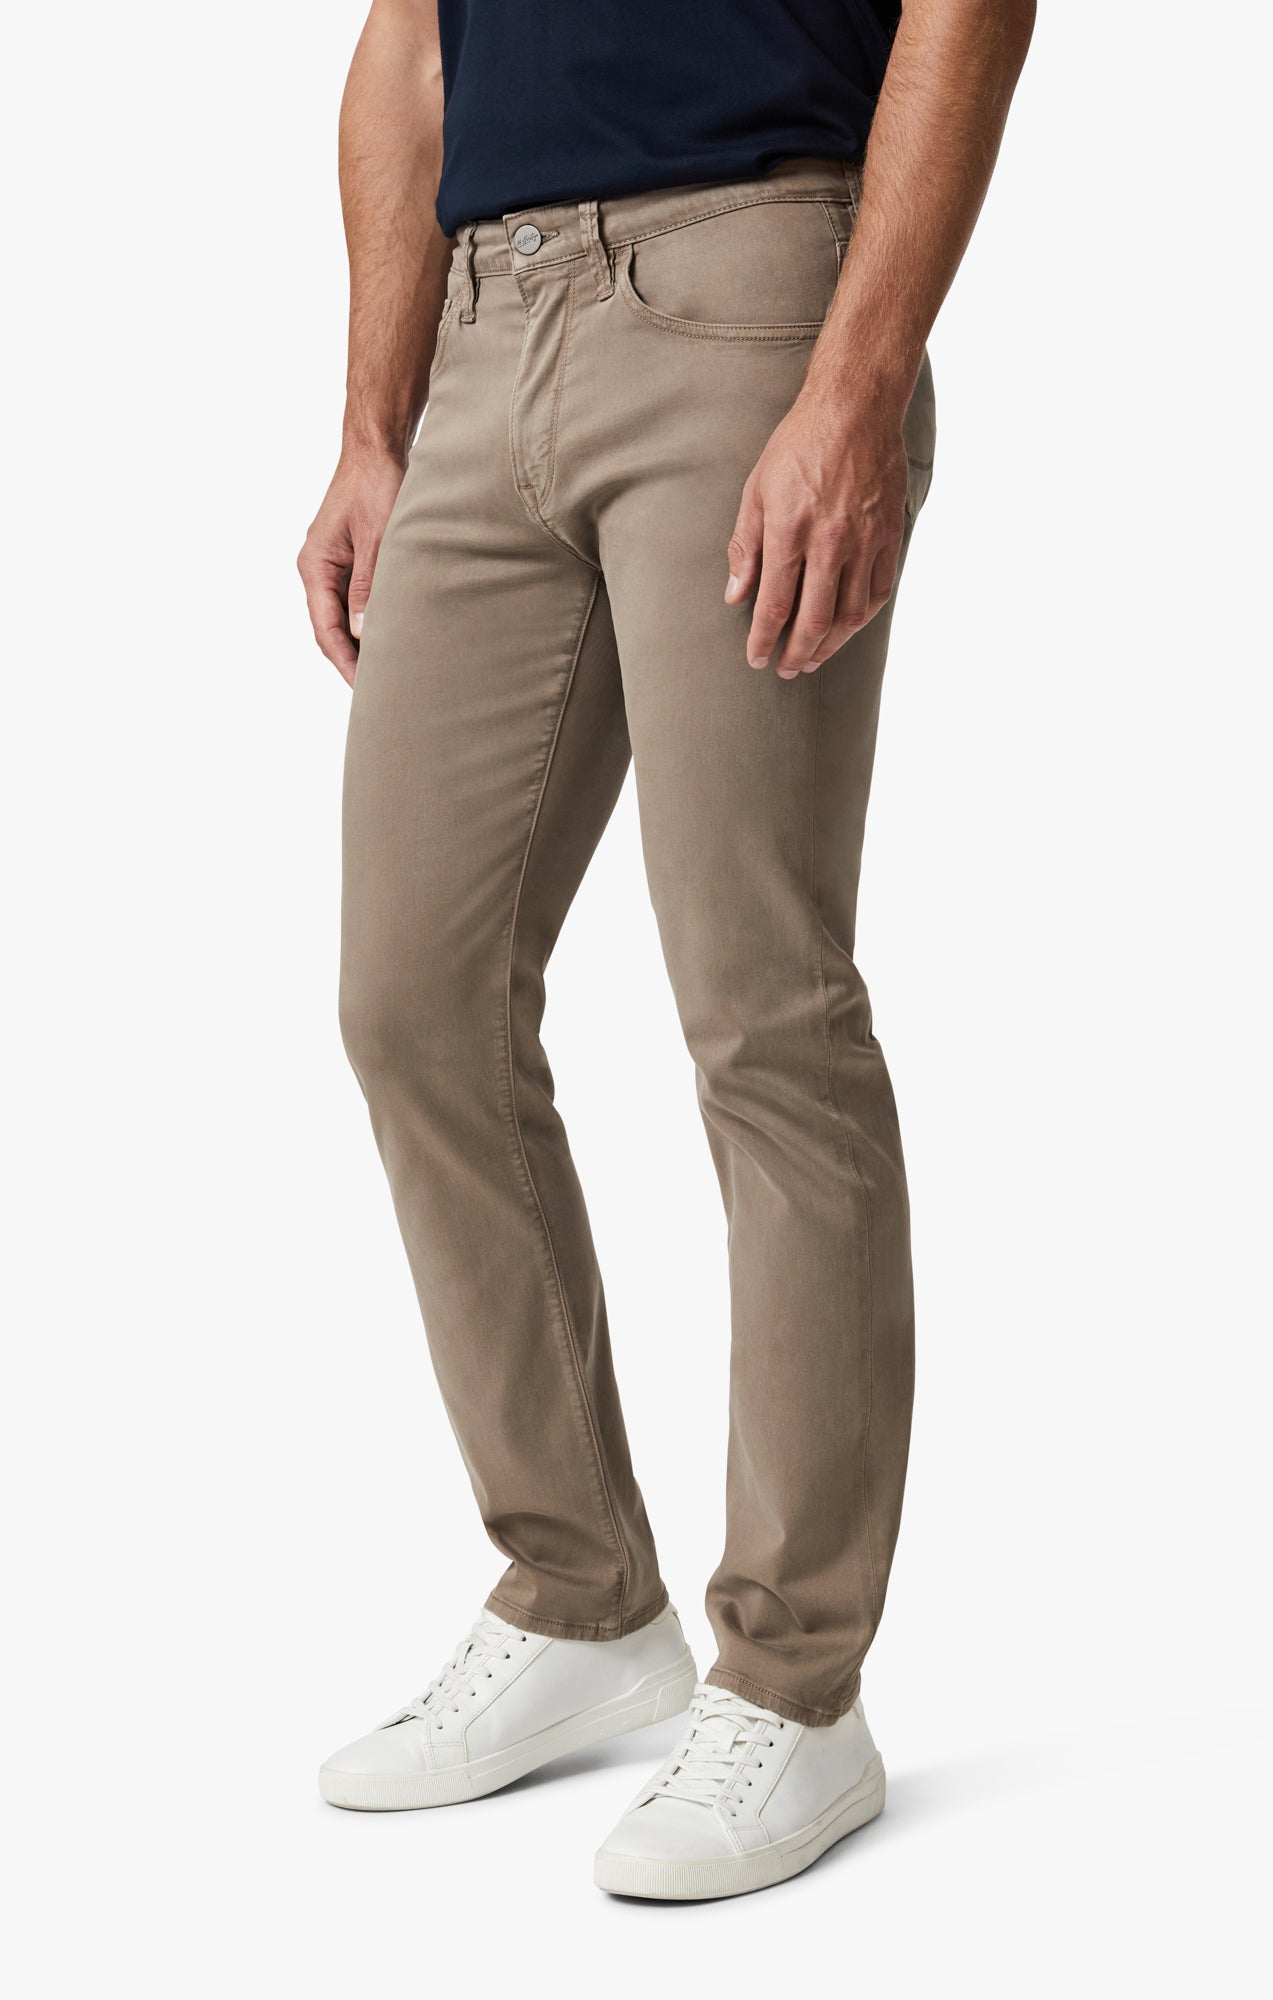 DKNY Men's 5 Pocket Twill Pants 